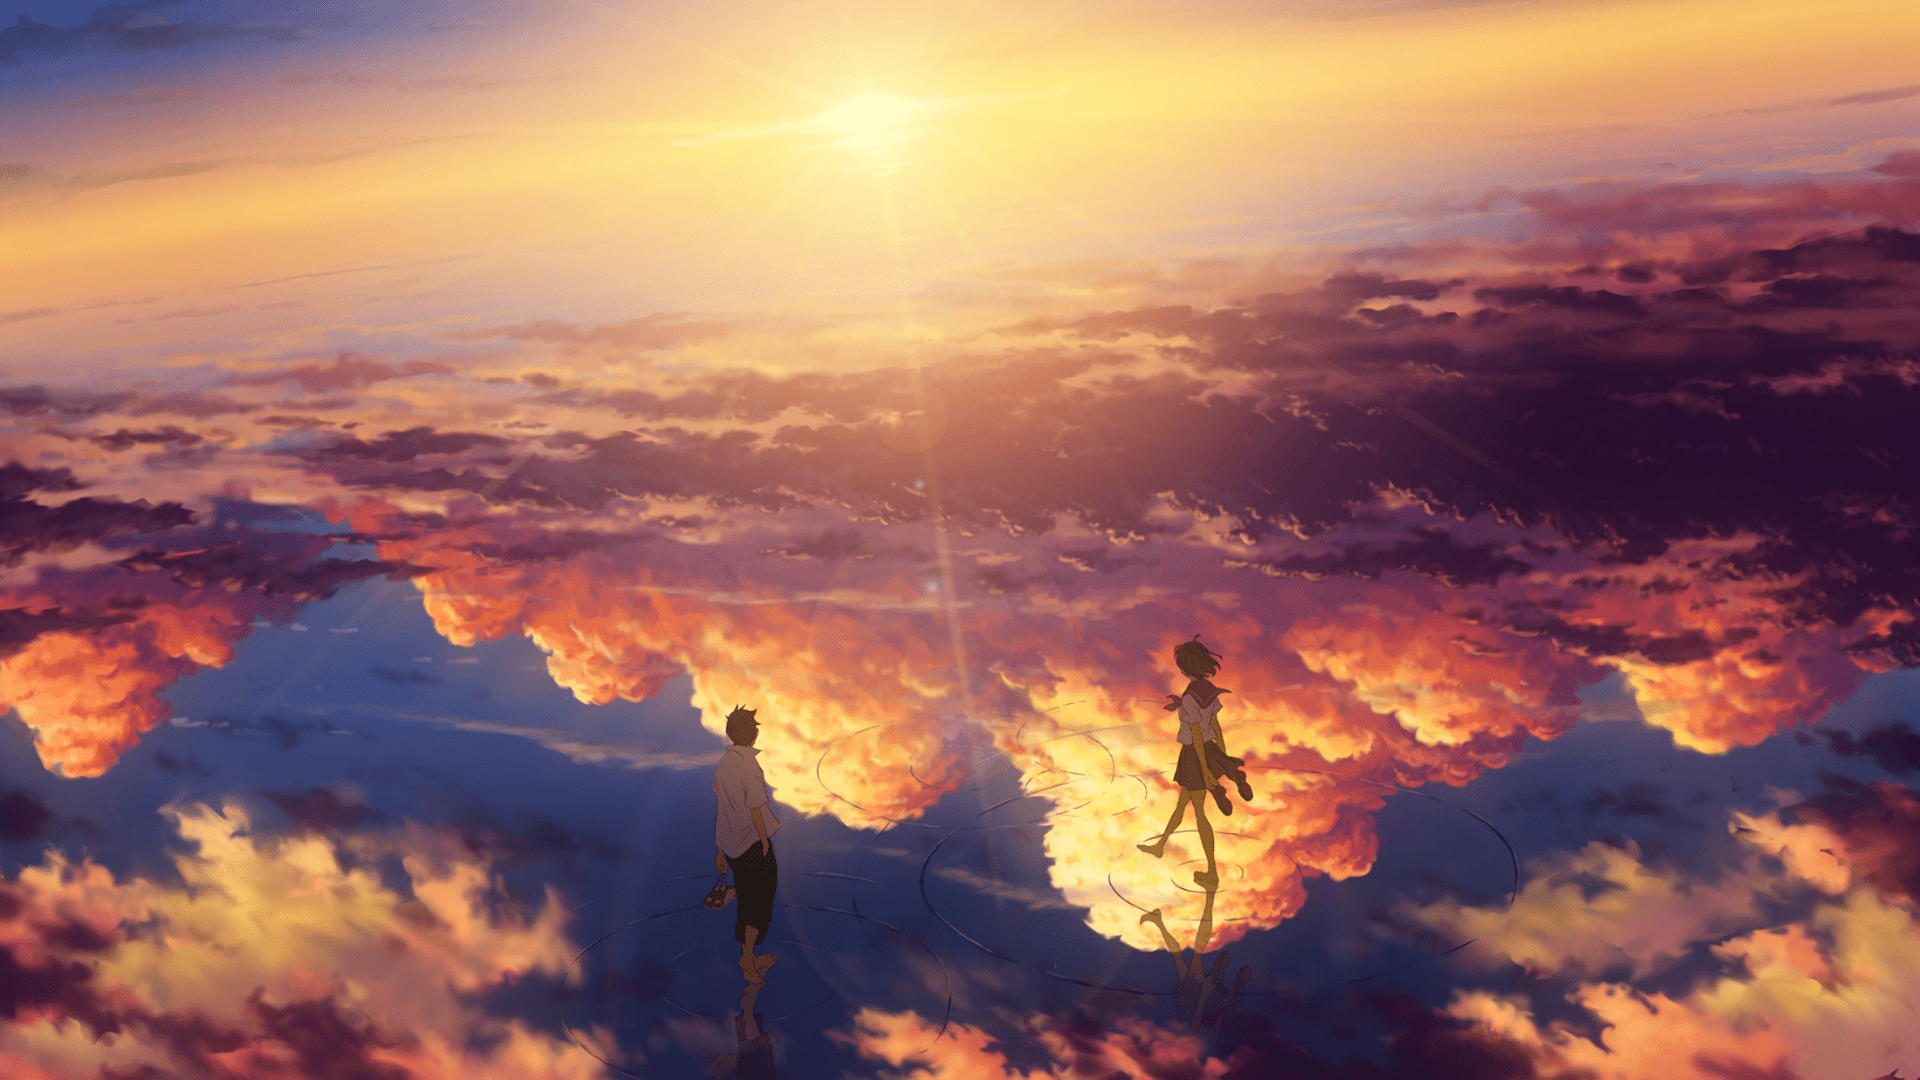 Sunset Anime Scenery Wallpaper Free Sunset Anime Scenery Background